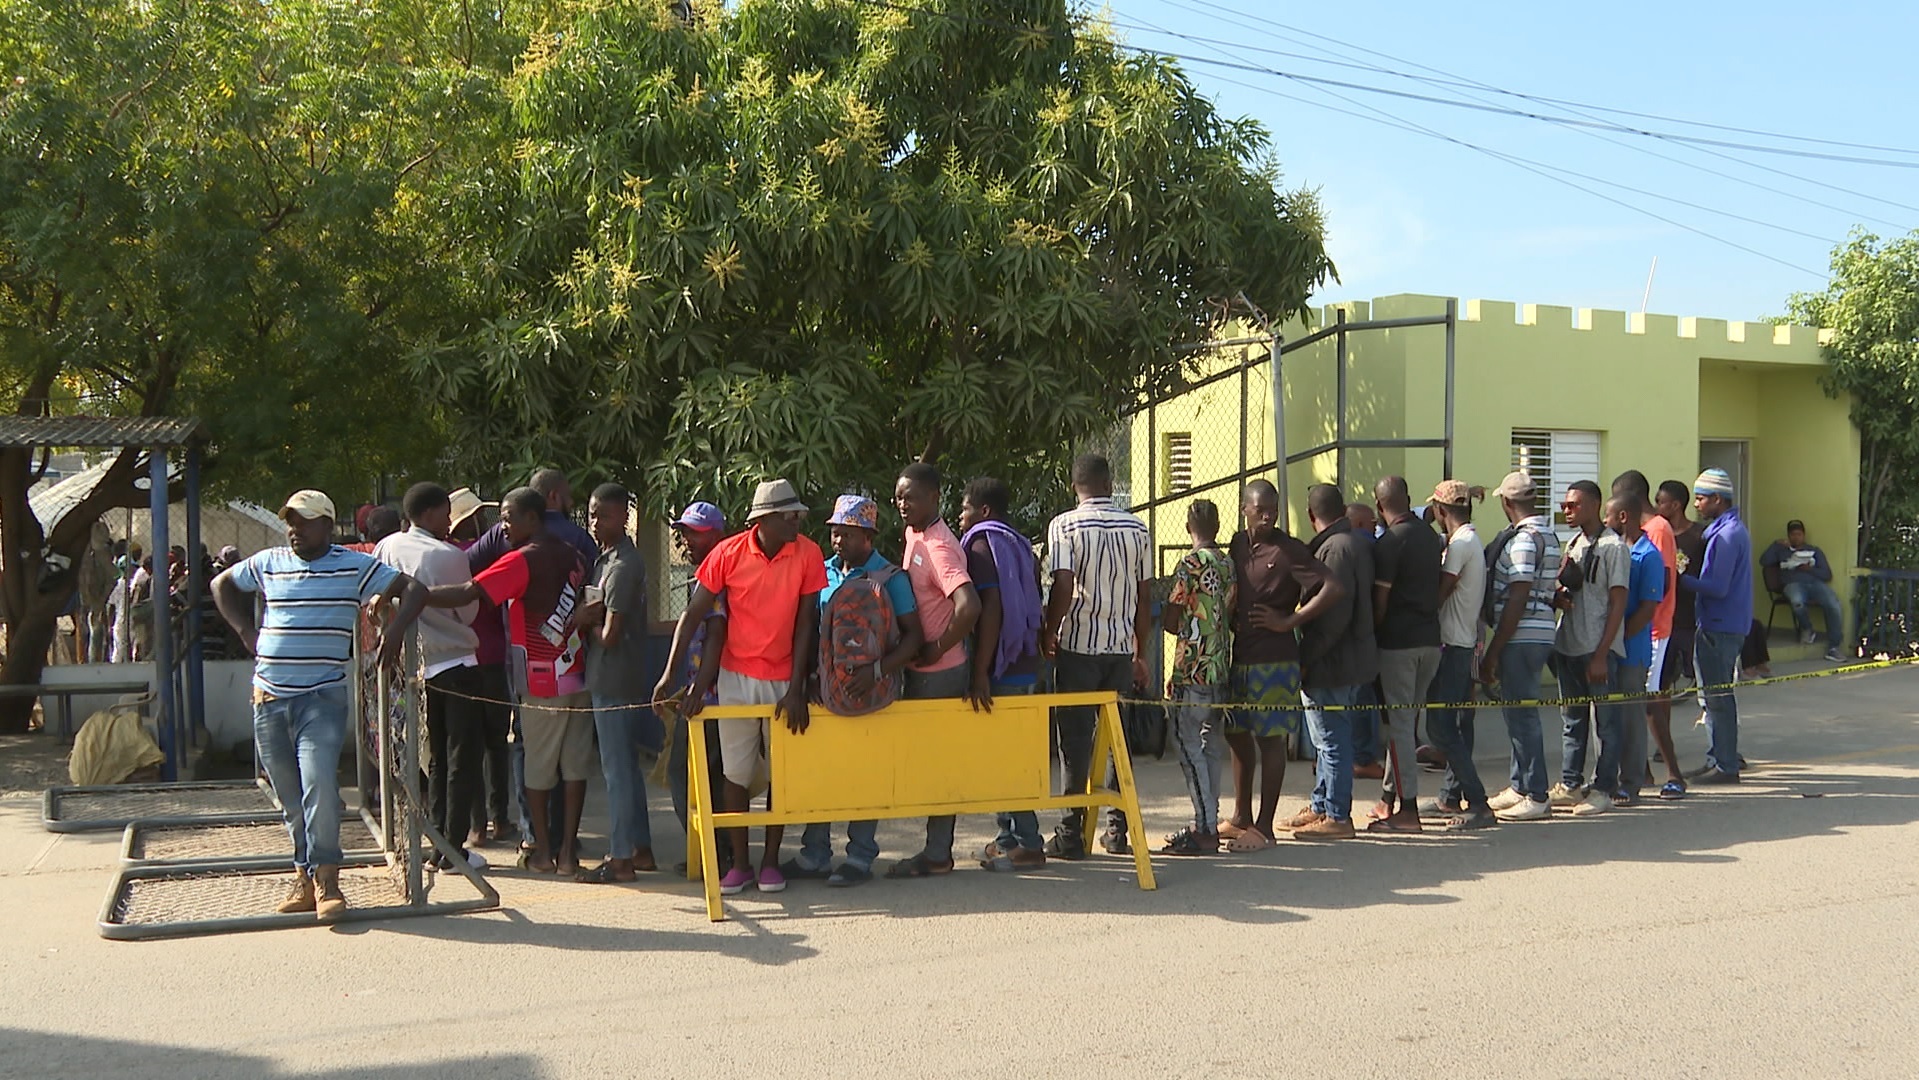 Al Jazeera films Haitians being deported back across border into chaos